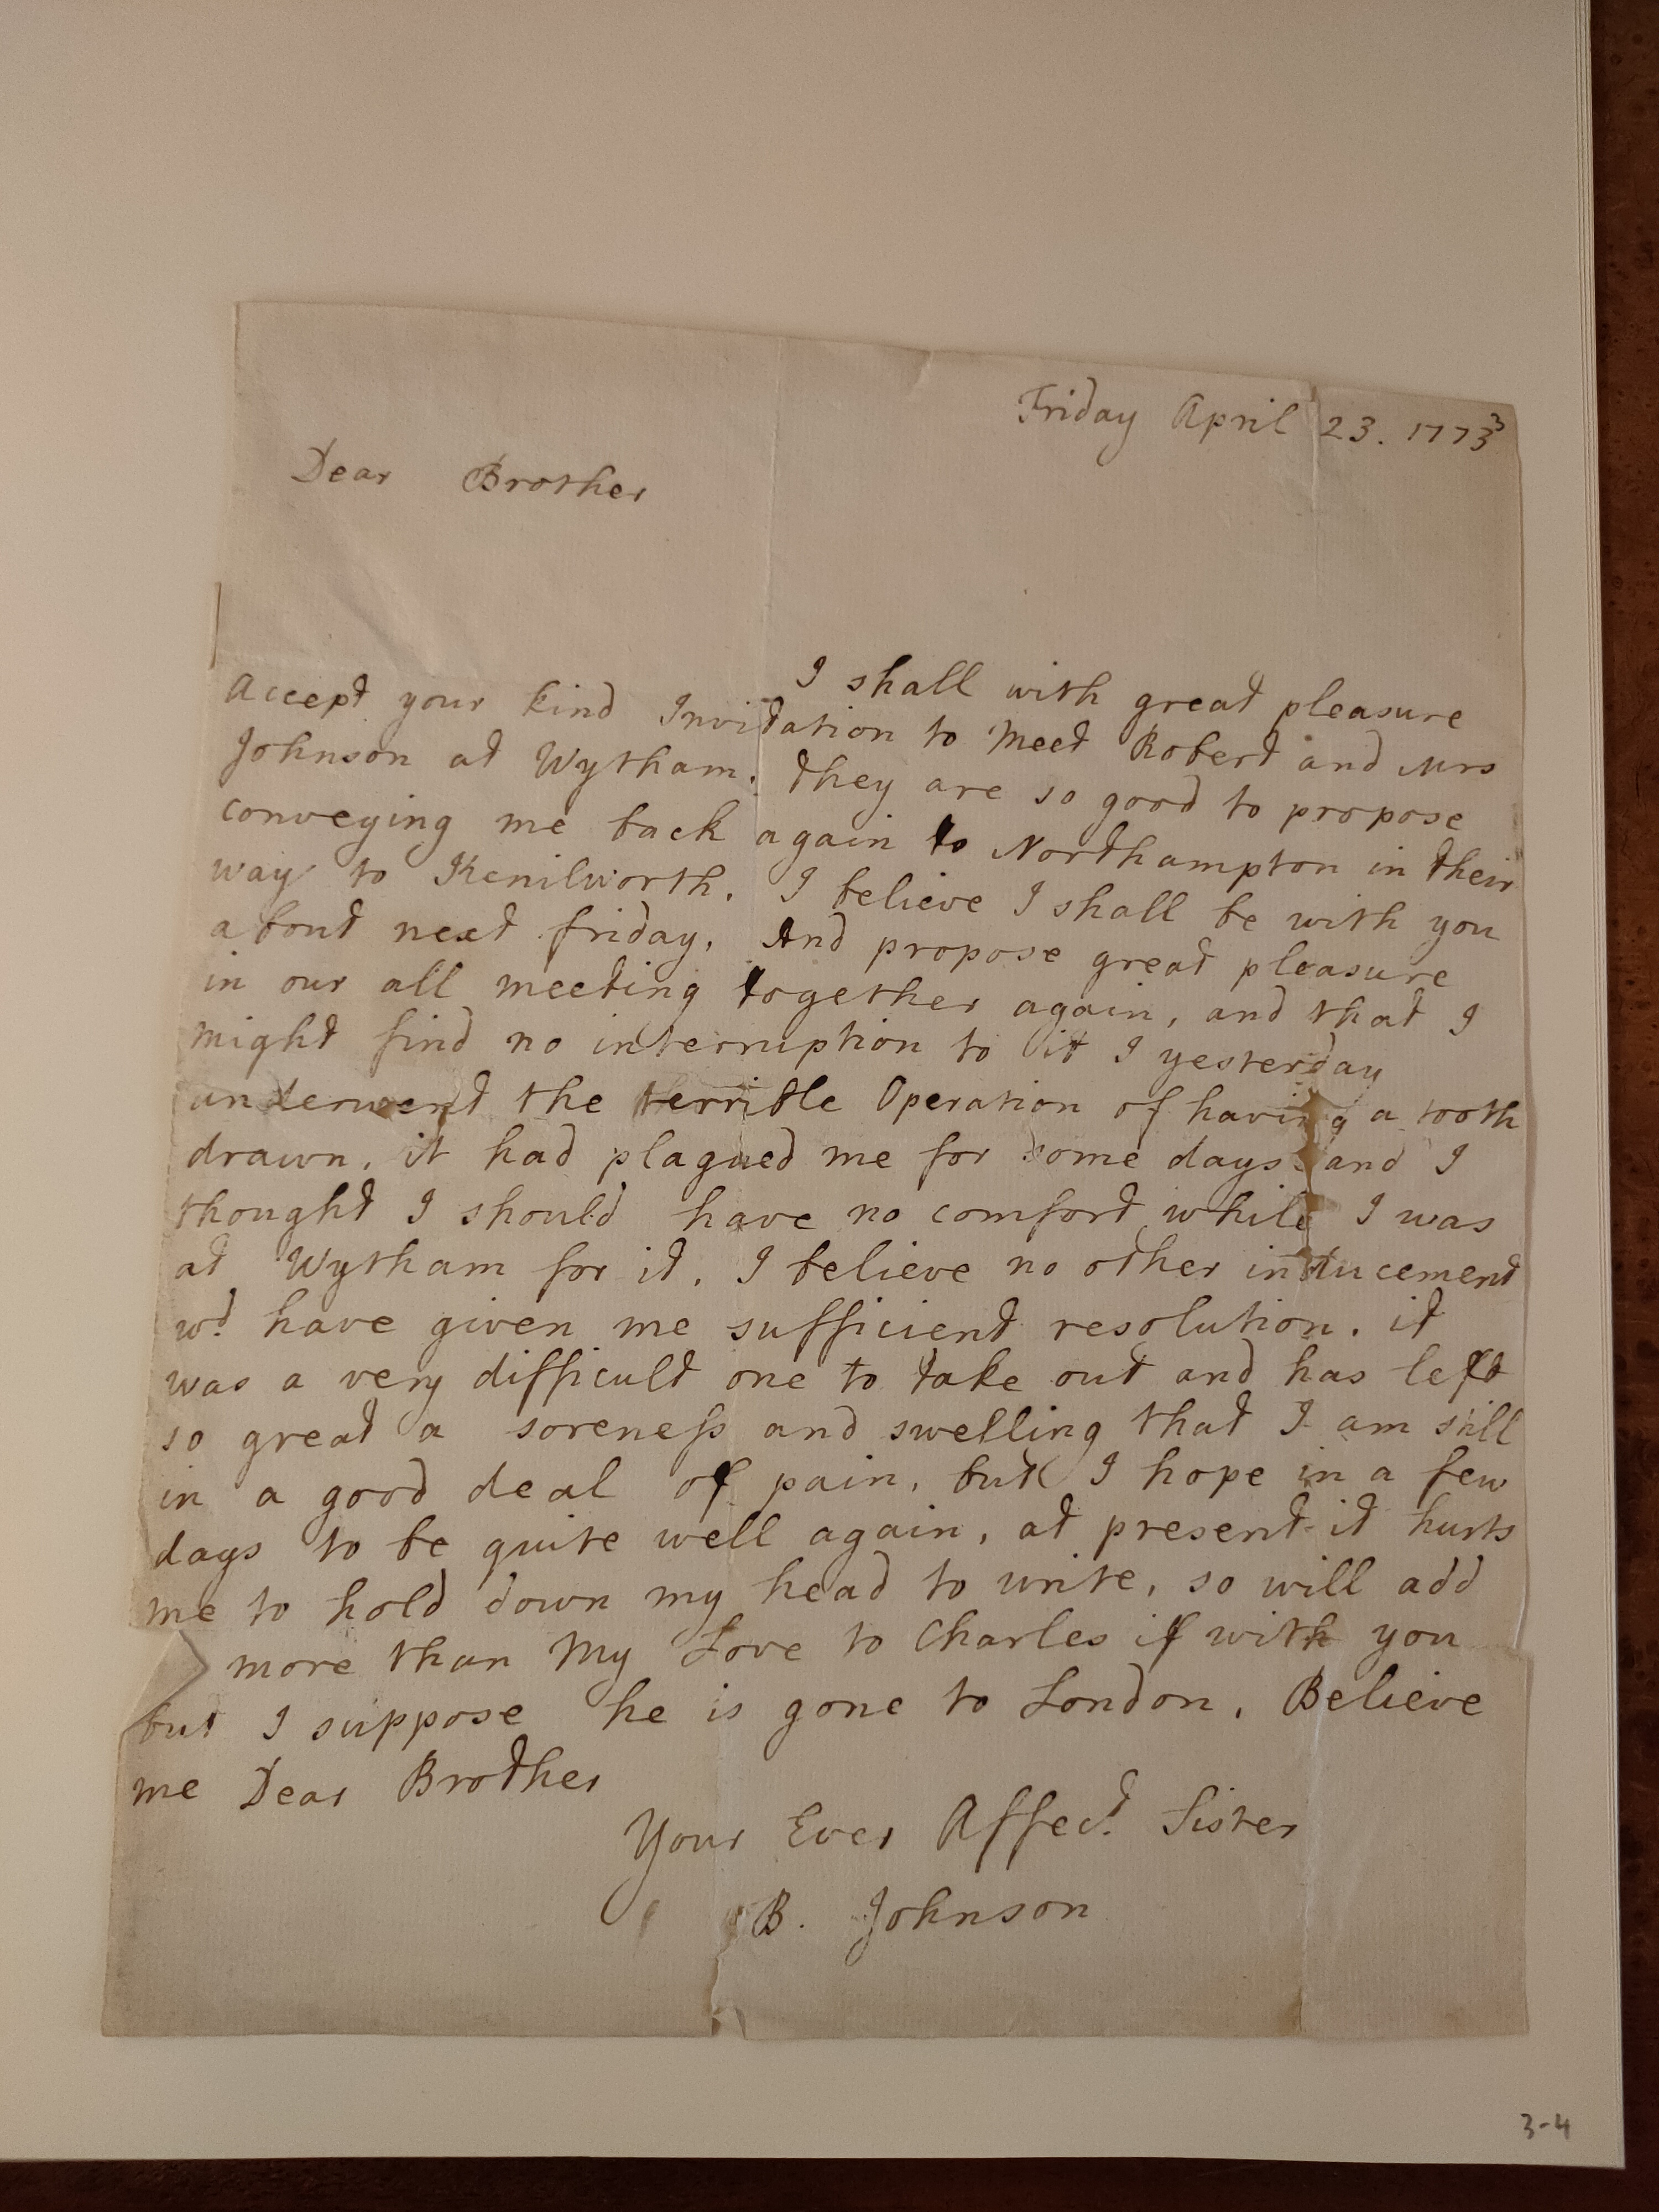 Image #1 of letter: Barbara Johnson to George William Johnson, 23 April 1773